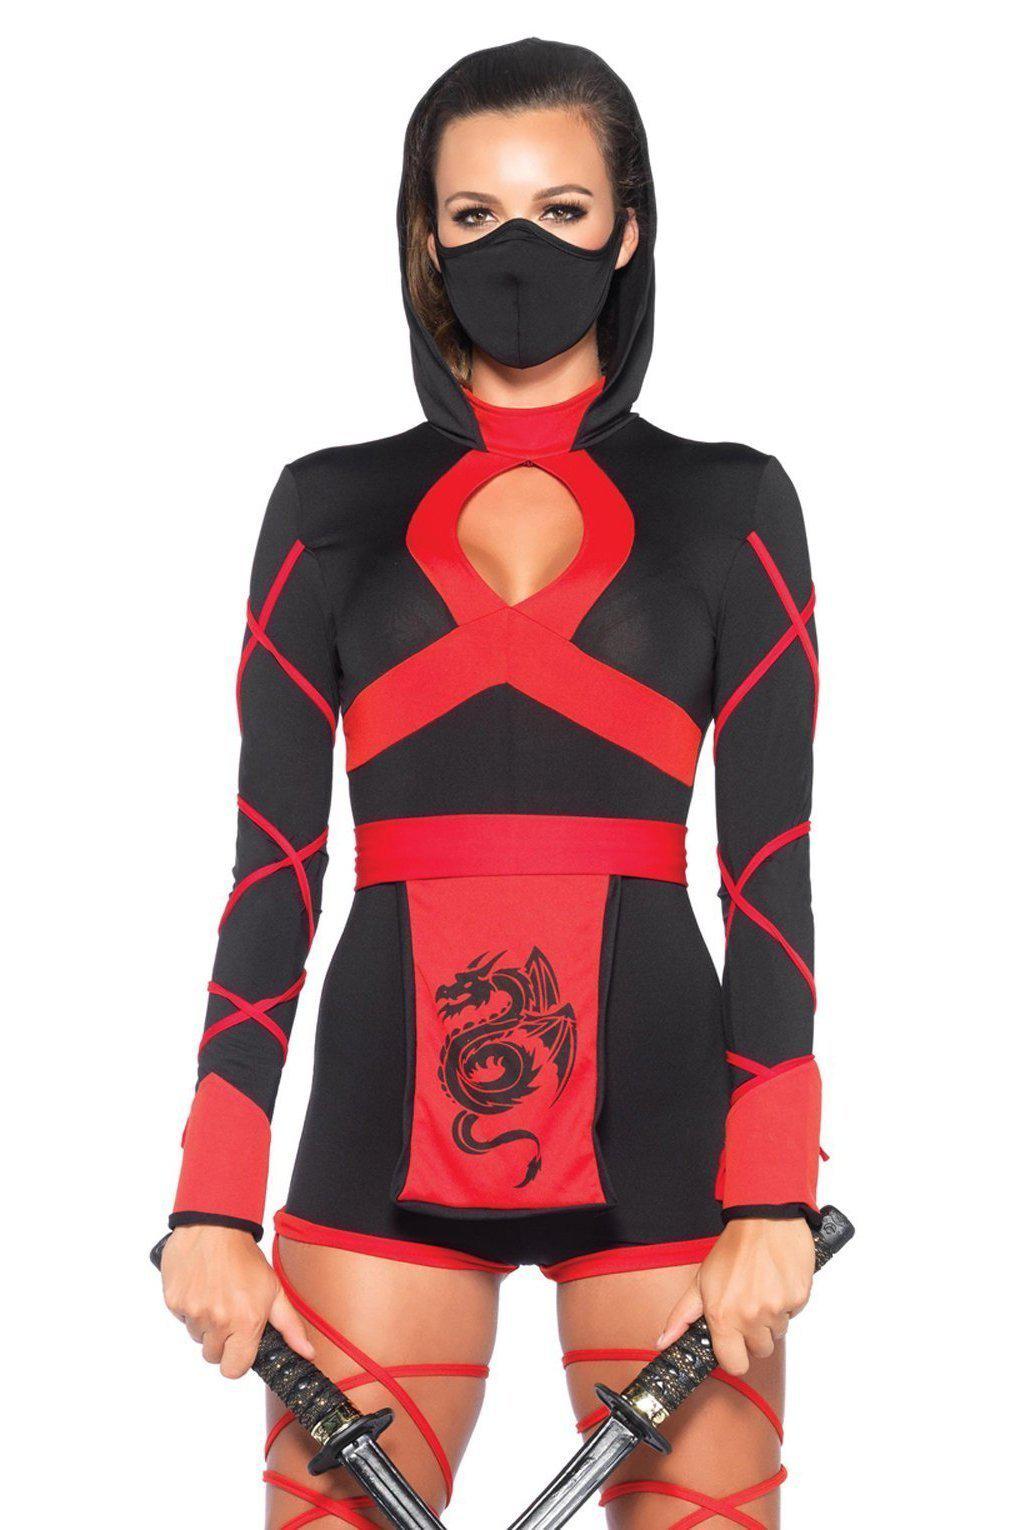 Sexy Dragon Ninja Costume-Villian Costumes-Leg Avenue-Black-S-SEXYSHOES.COM